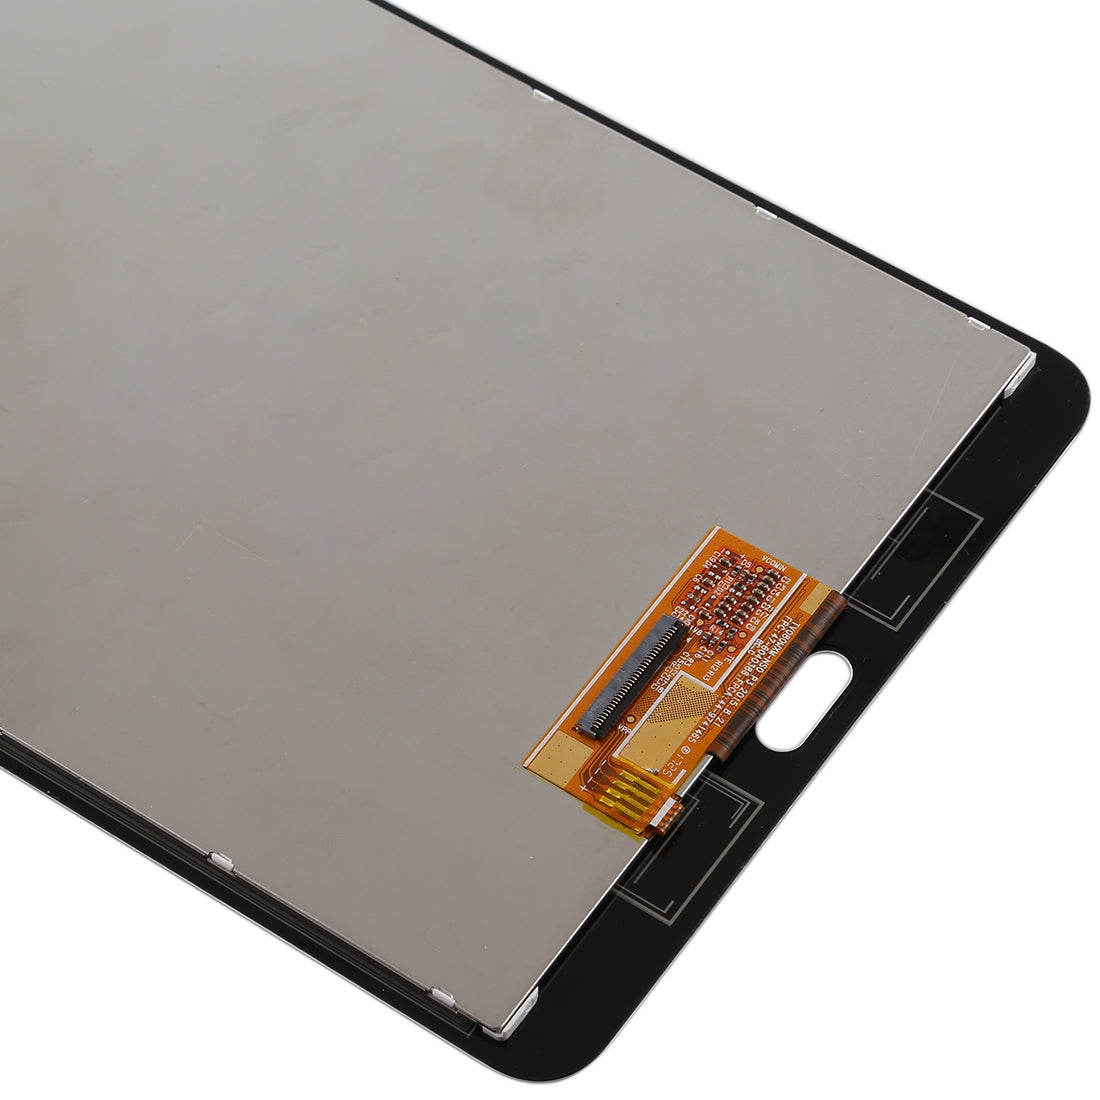 Ecran LCD + Vitre Tactile Samsung Galaxy Tab A T385 Blanc